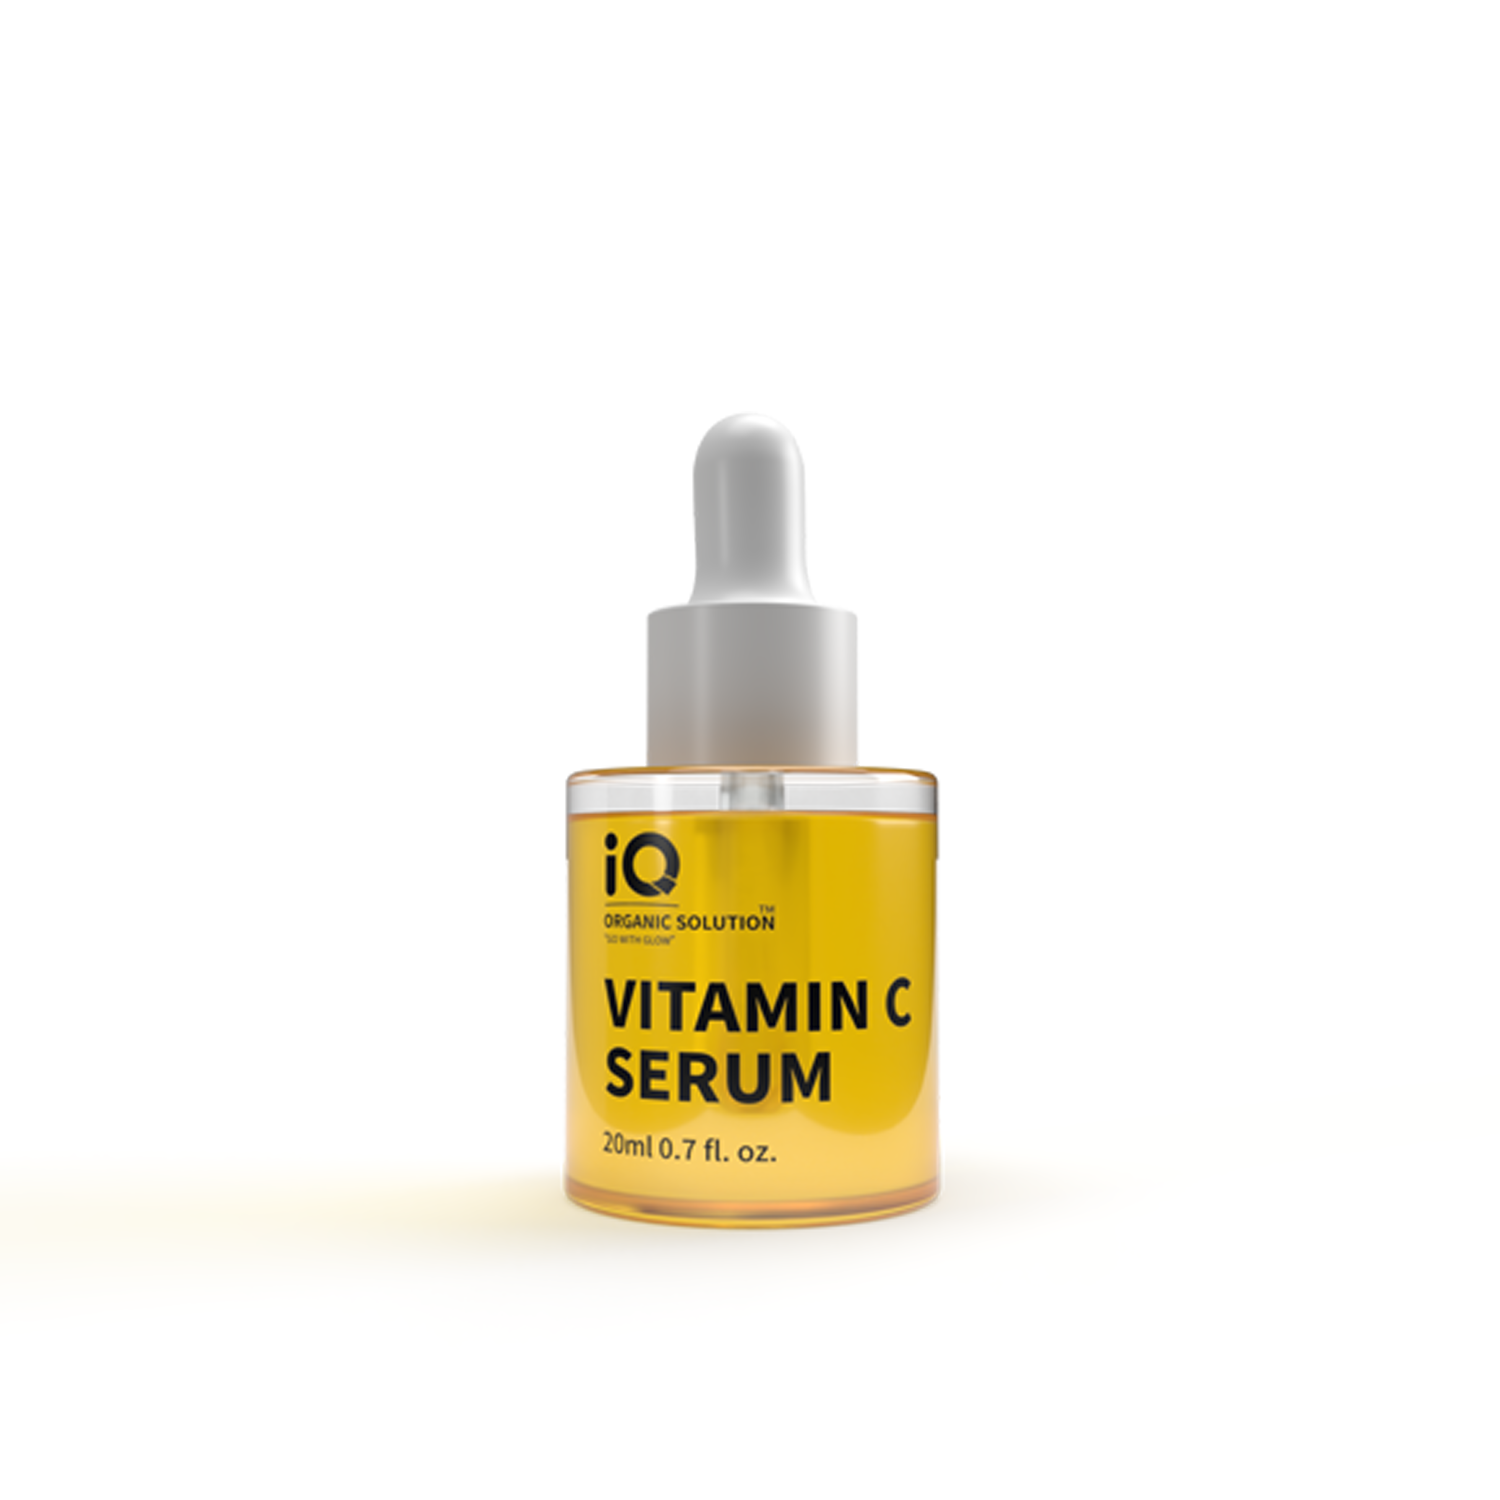 Vitamin C Serum 20ml - IQ Organic Solution™️